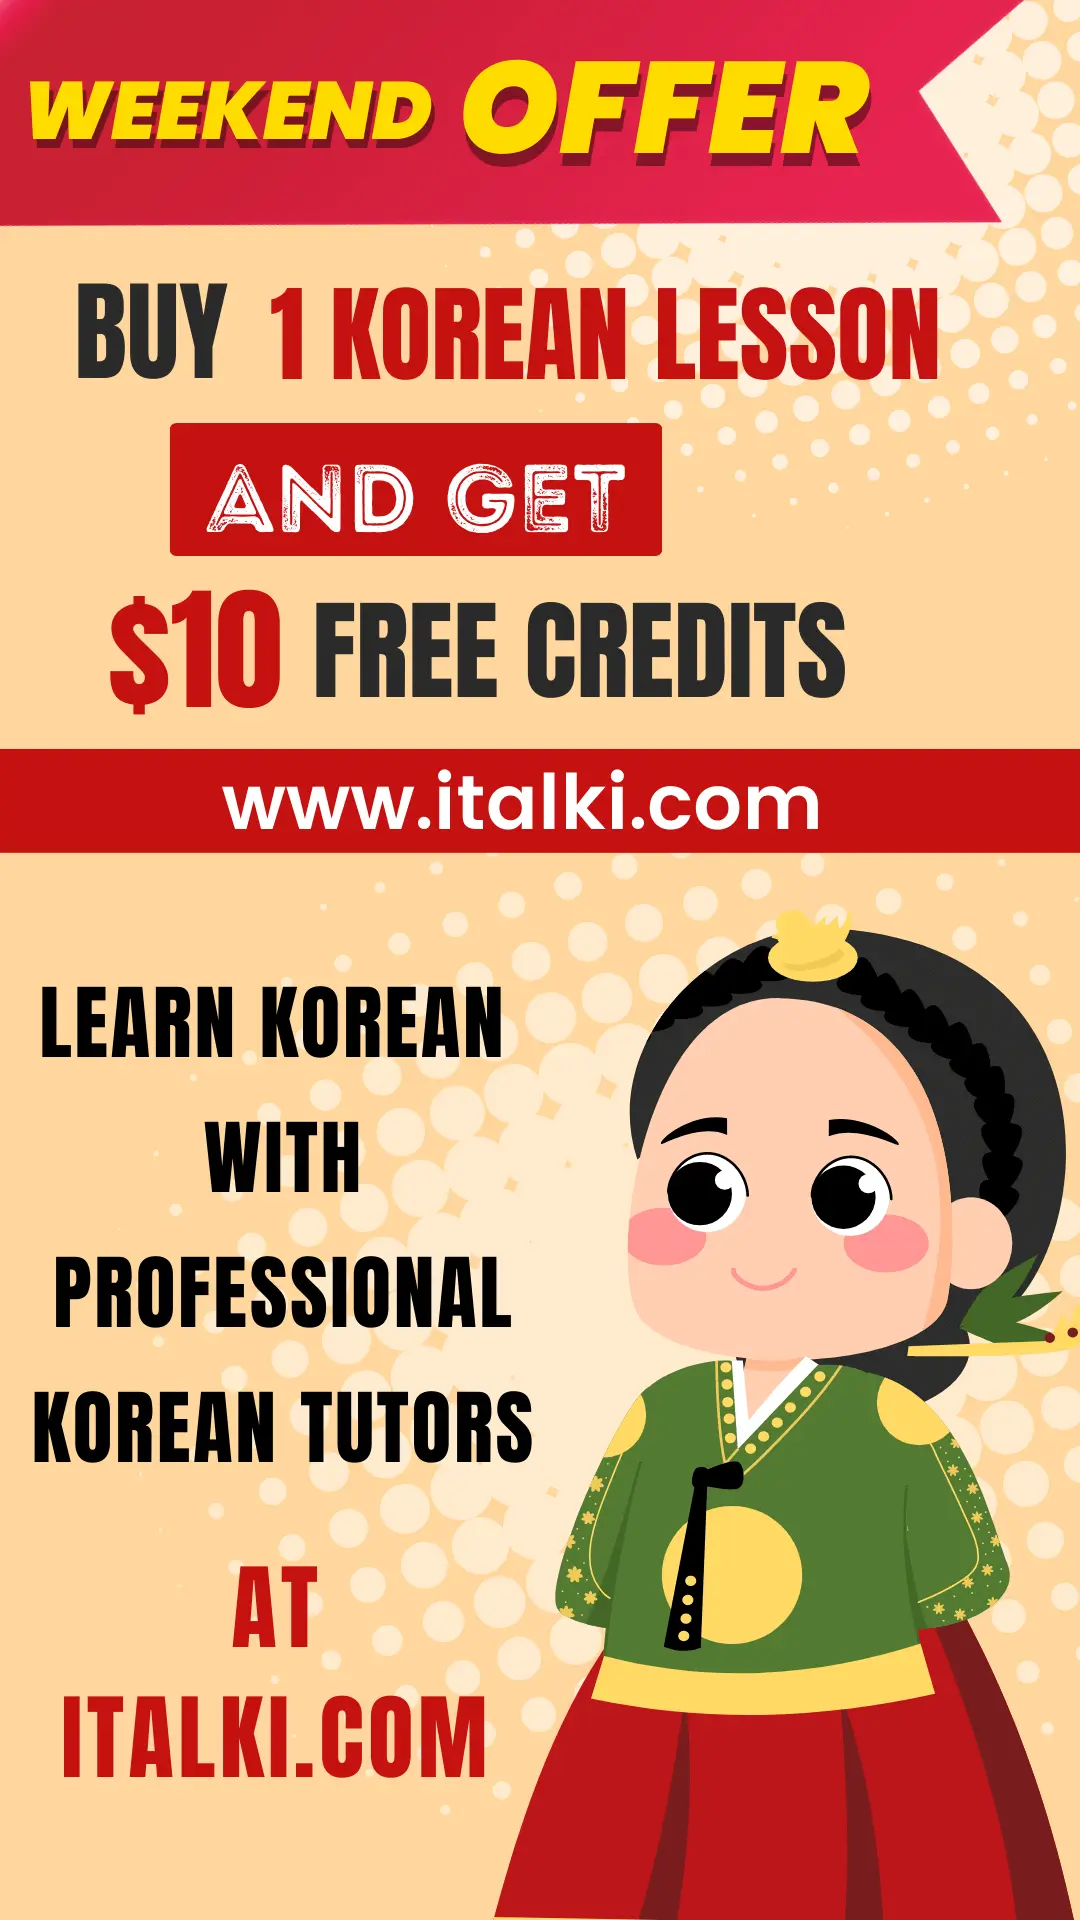 LEARN KOREAN WITH KOREAN TEACHER